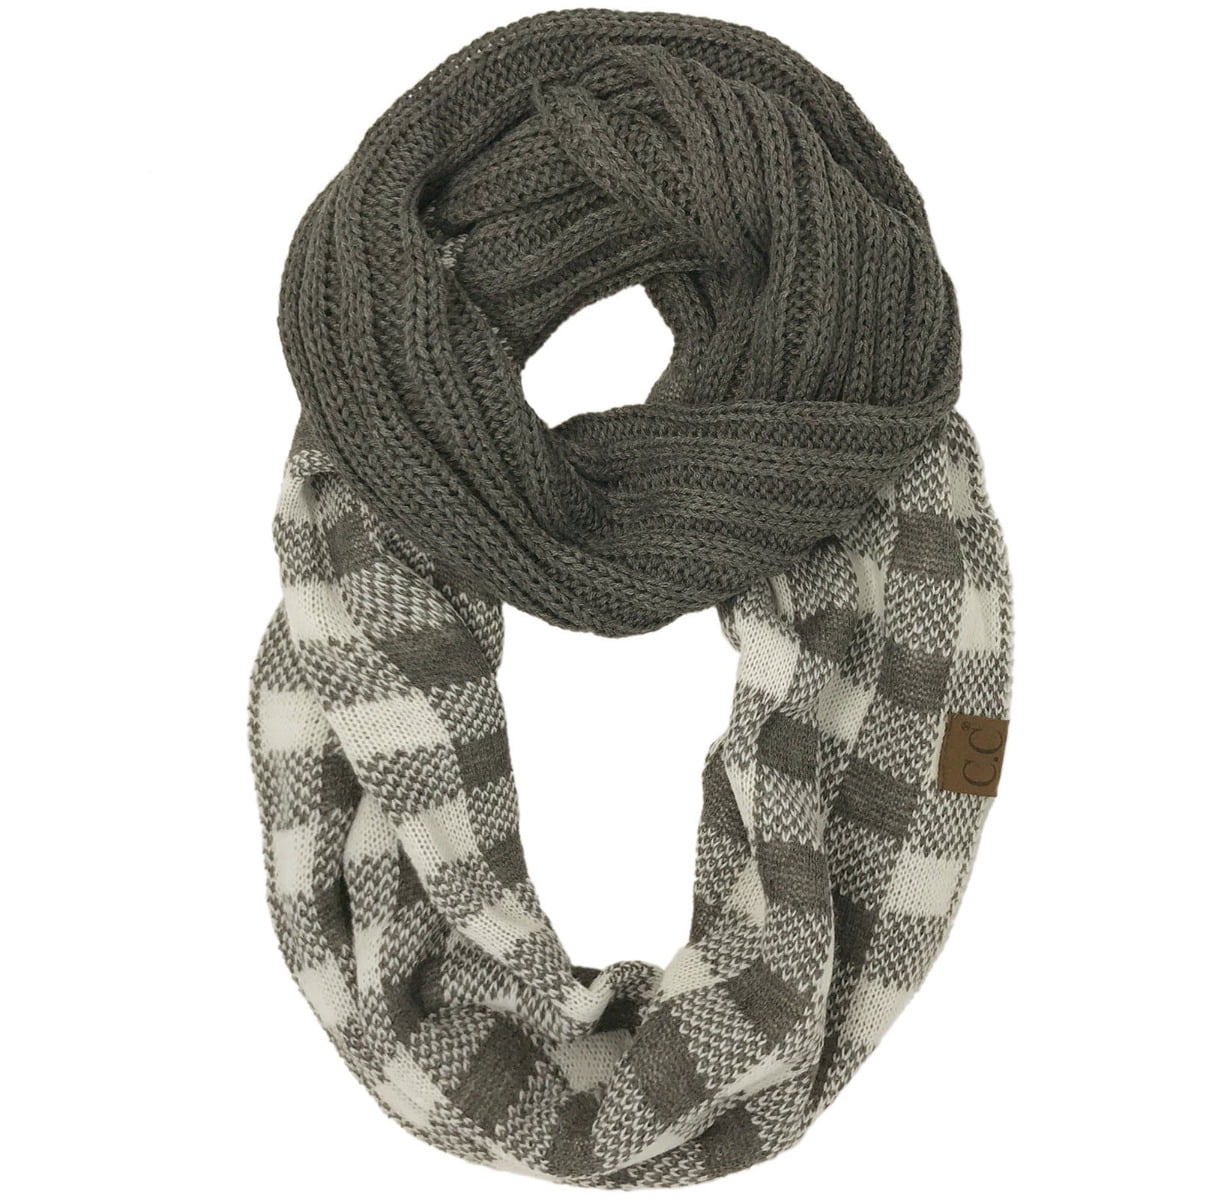 INFINITY SCARF Loop Cowl Blue Gray Grey Chunky Winter Handmade Soft Crochet Knit 